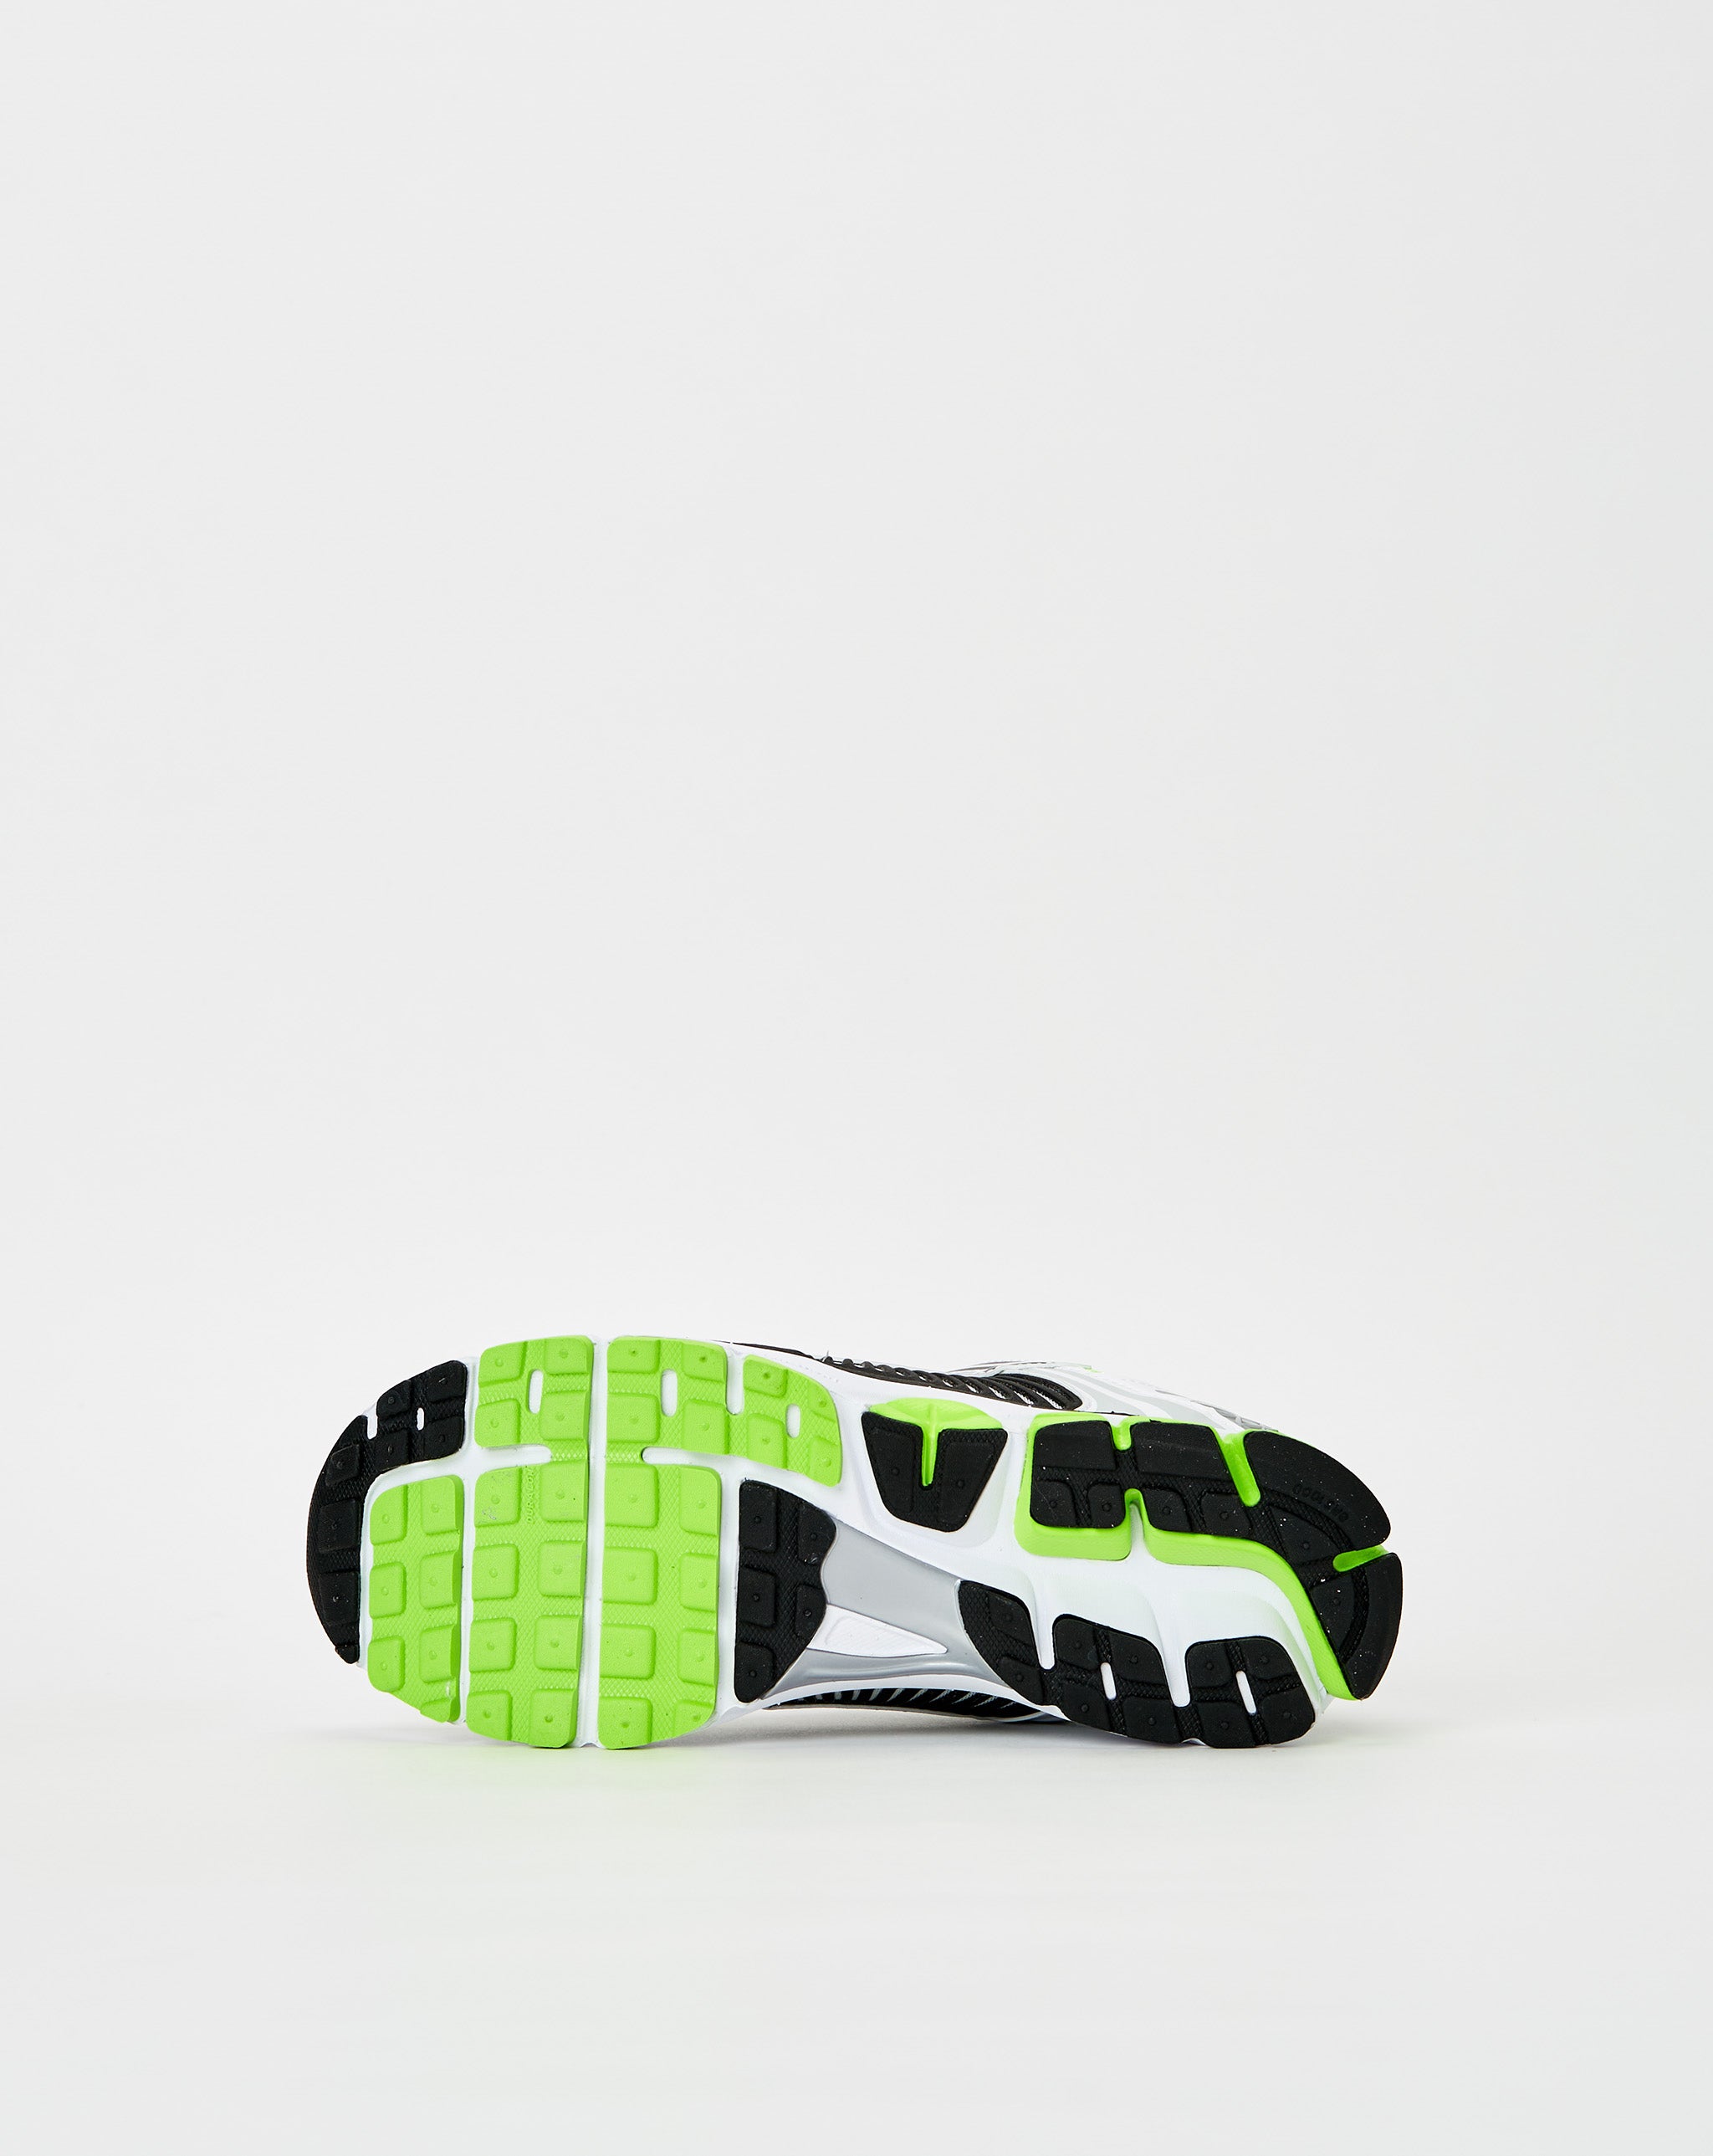 Nike wearing split-toe shoes does have its benefits  - Cheap Atelier-lumieres Jordan outlet